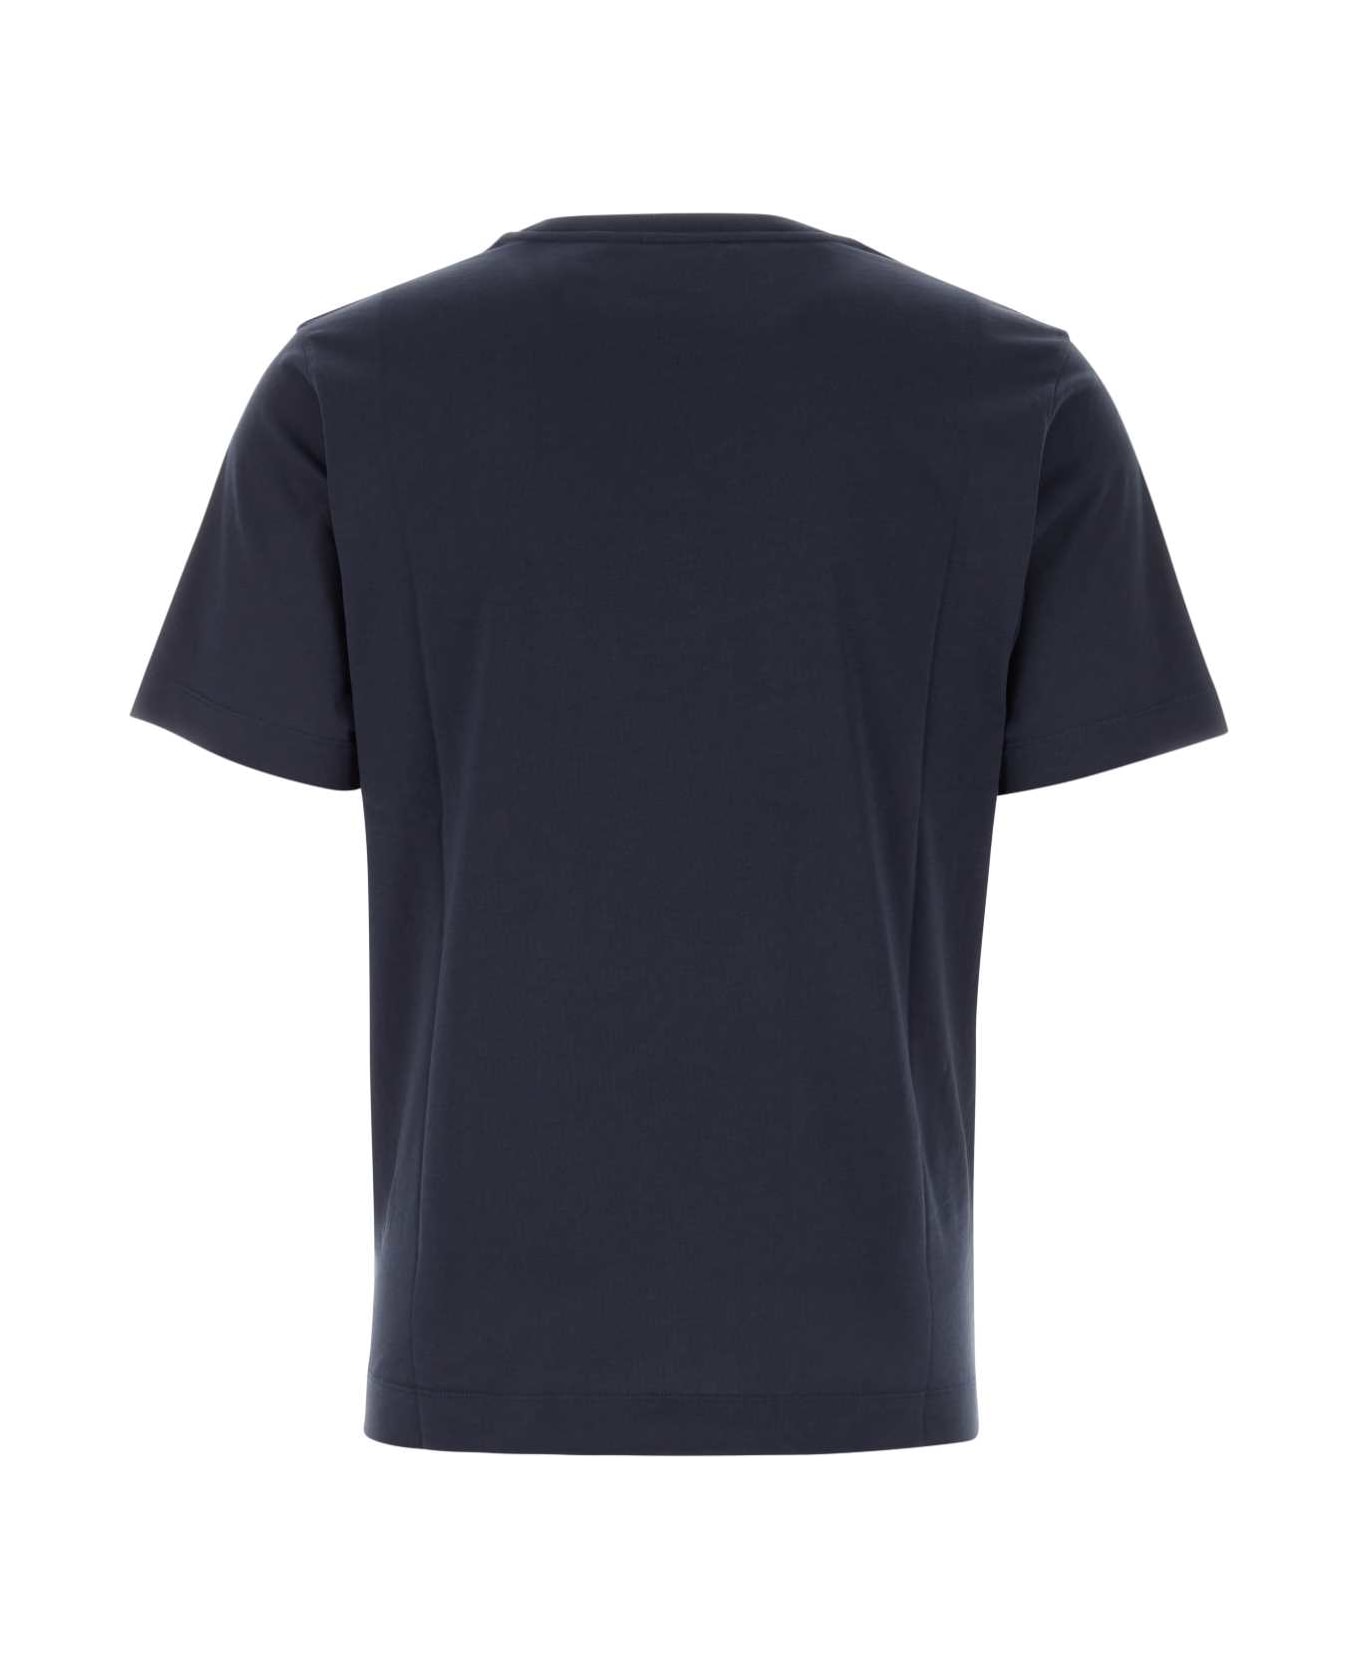 Dries Van Noten Midnight Blue Cotton T-shirt - NAVY